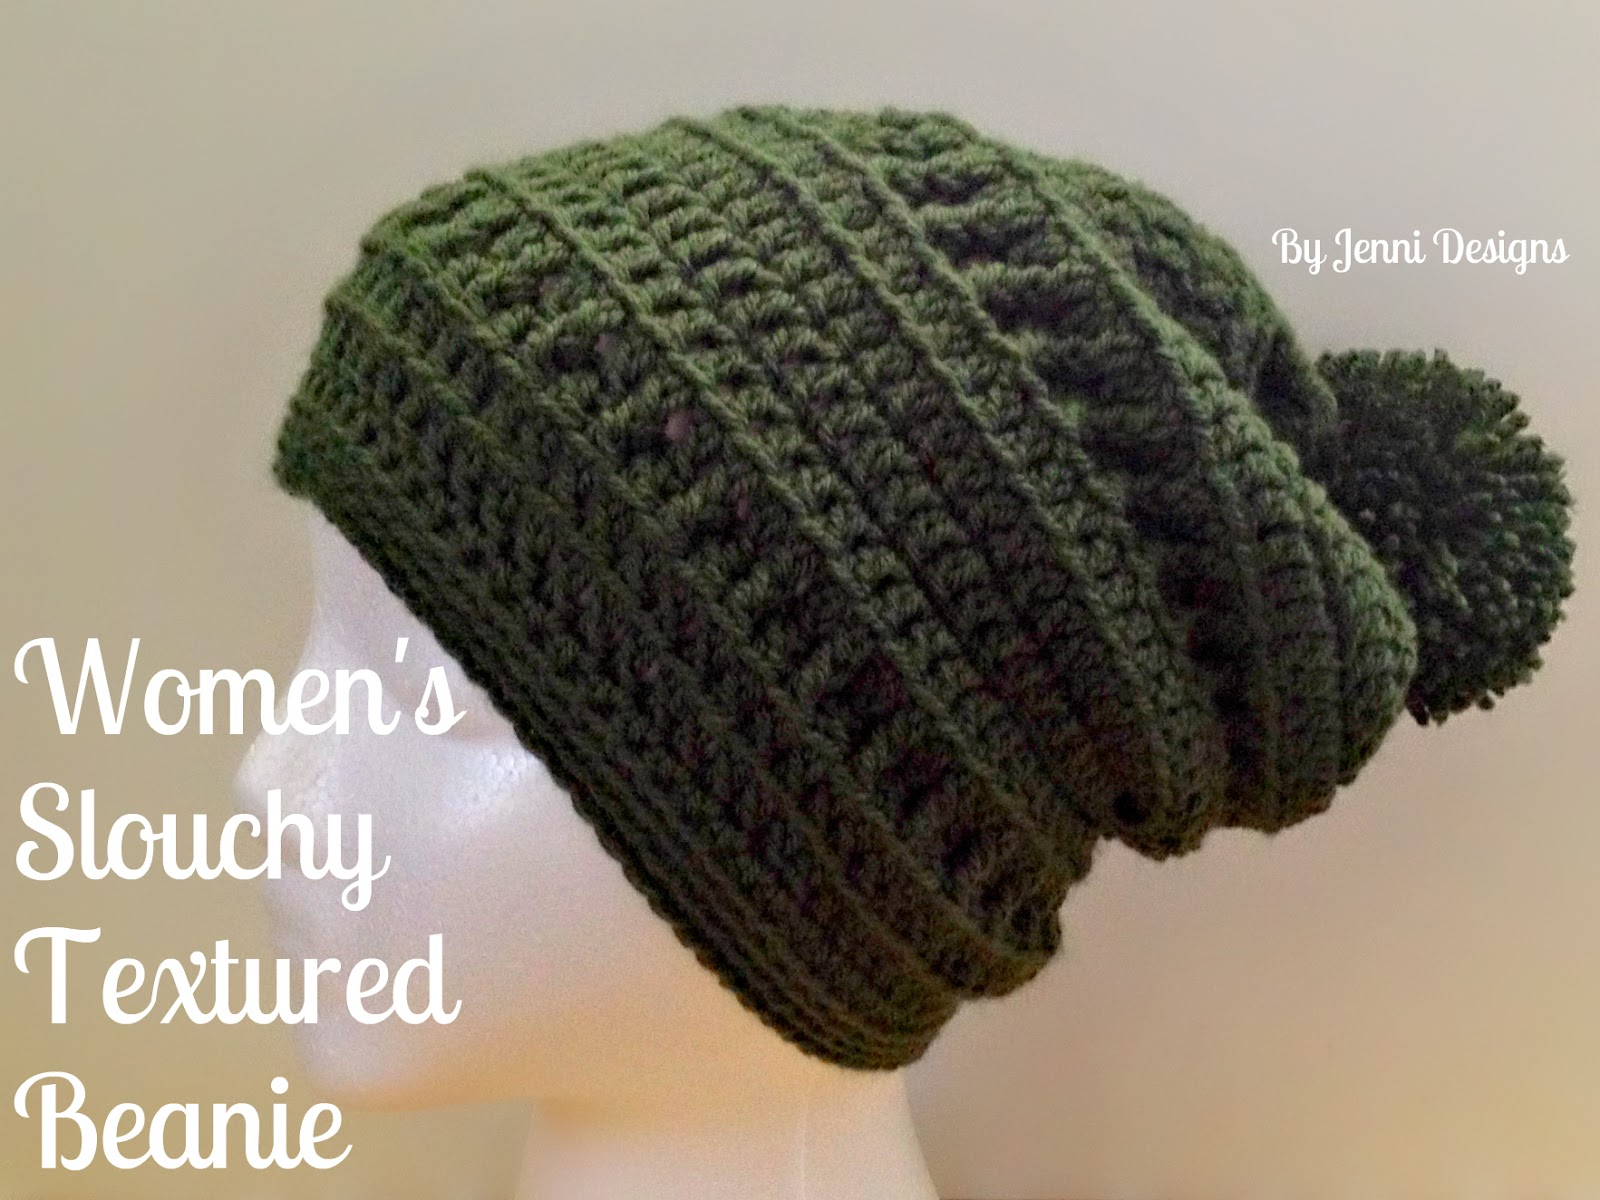 Crochet Slouchy Hat Pattern Free Jenni Designs Free Crochet Pattern Womens Slouchy Textured Beanie